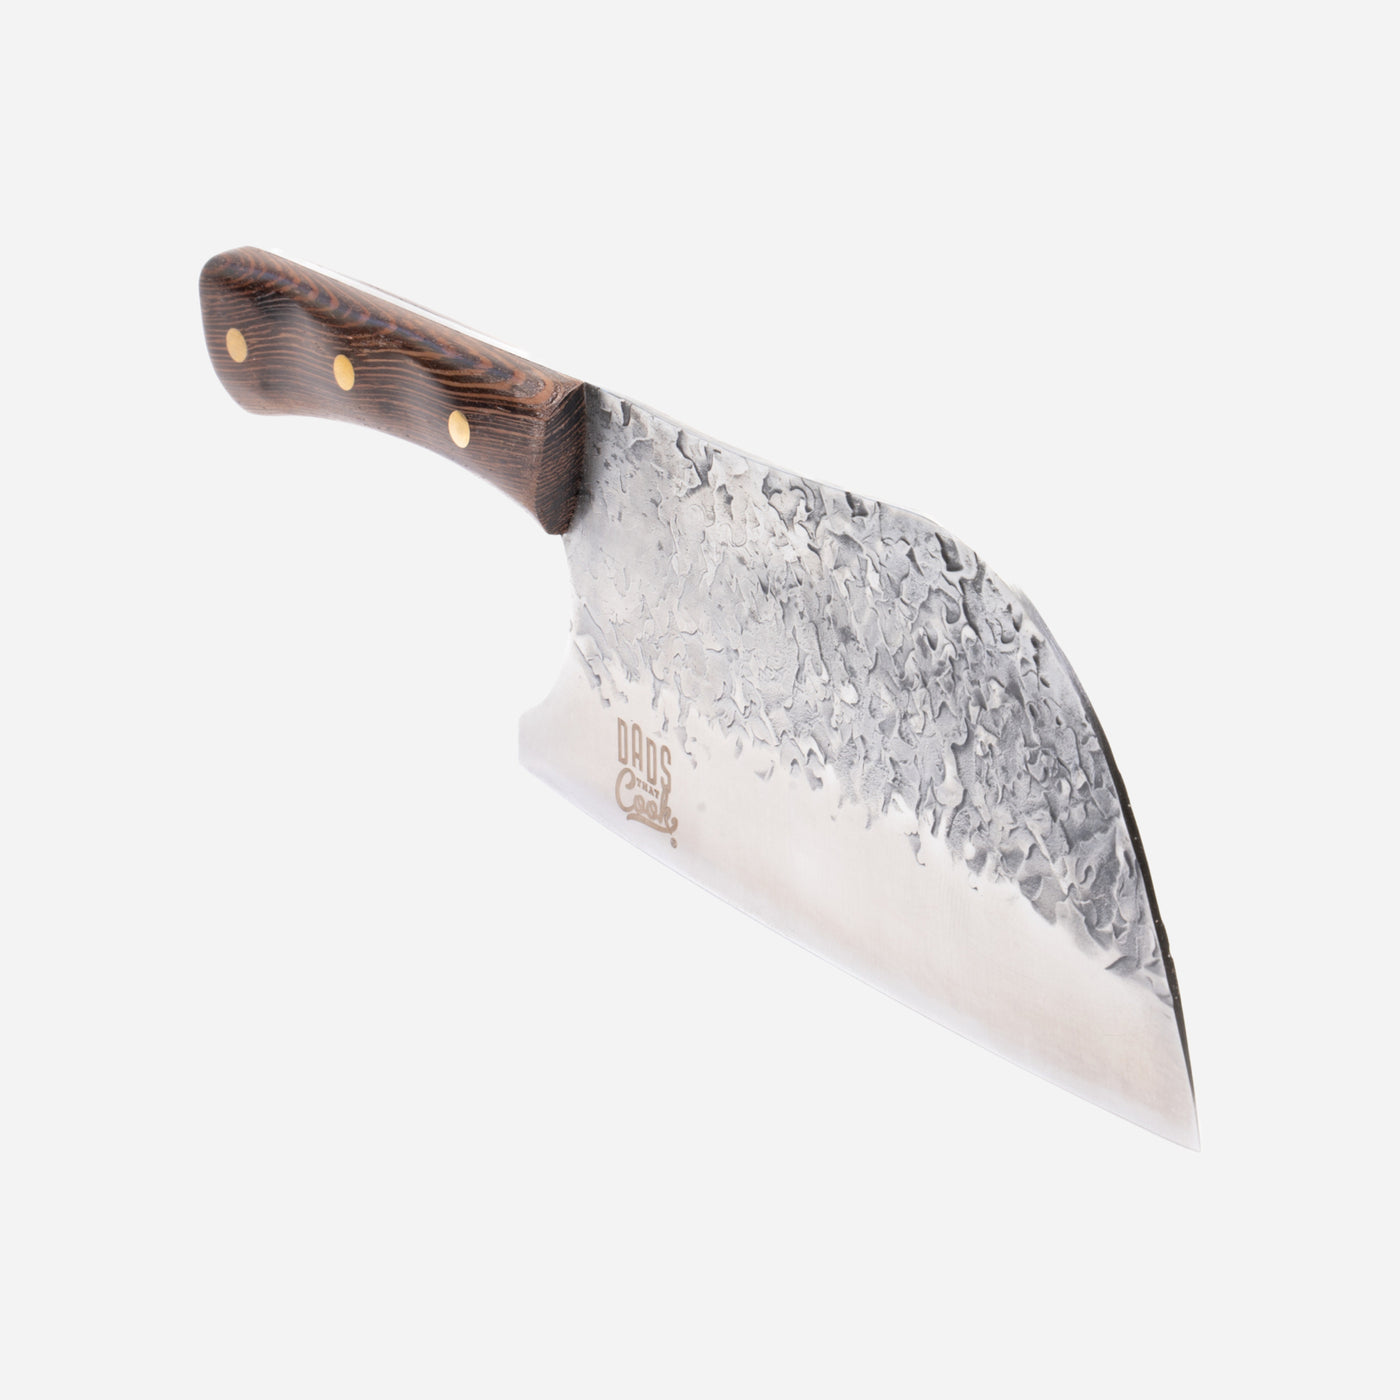 8″ Cleaver Knife